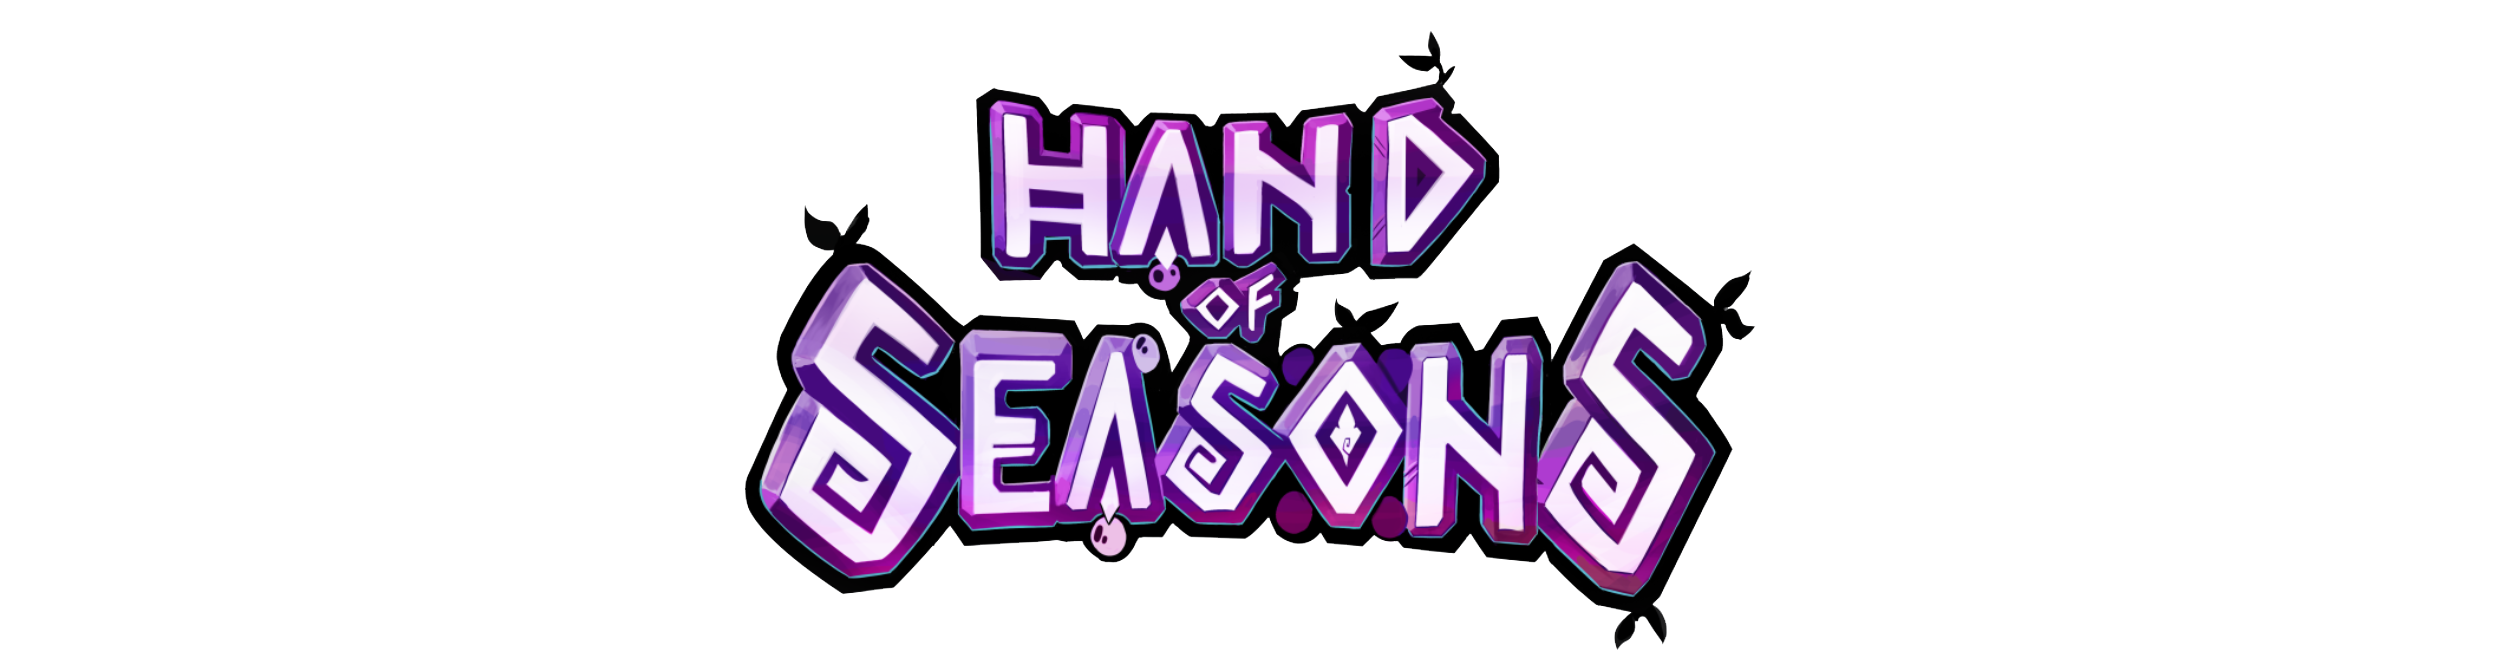 Hand of Seasons